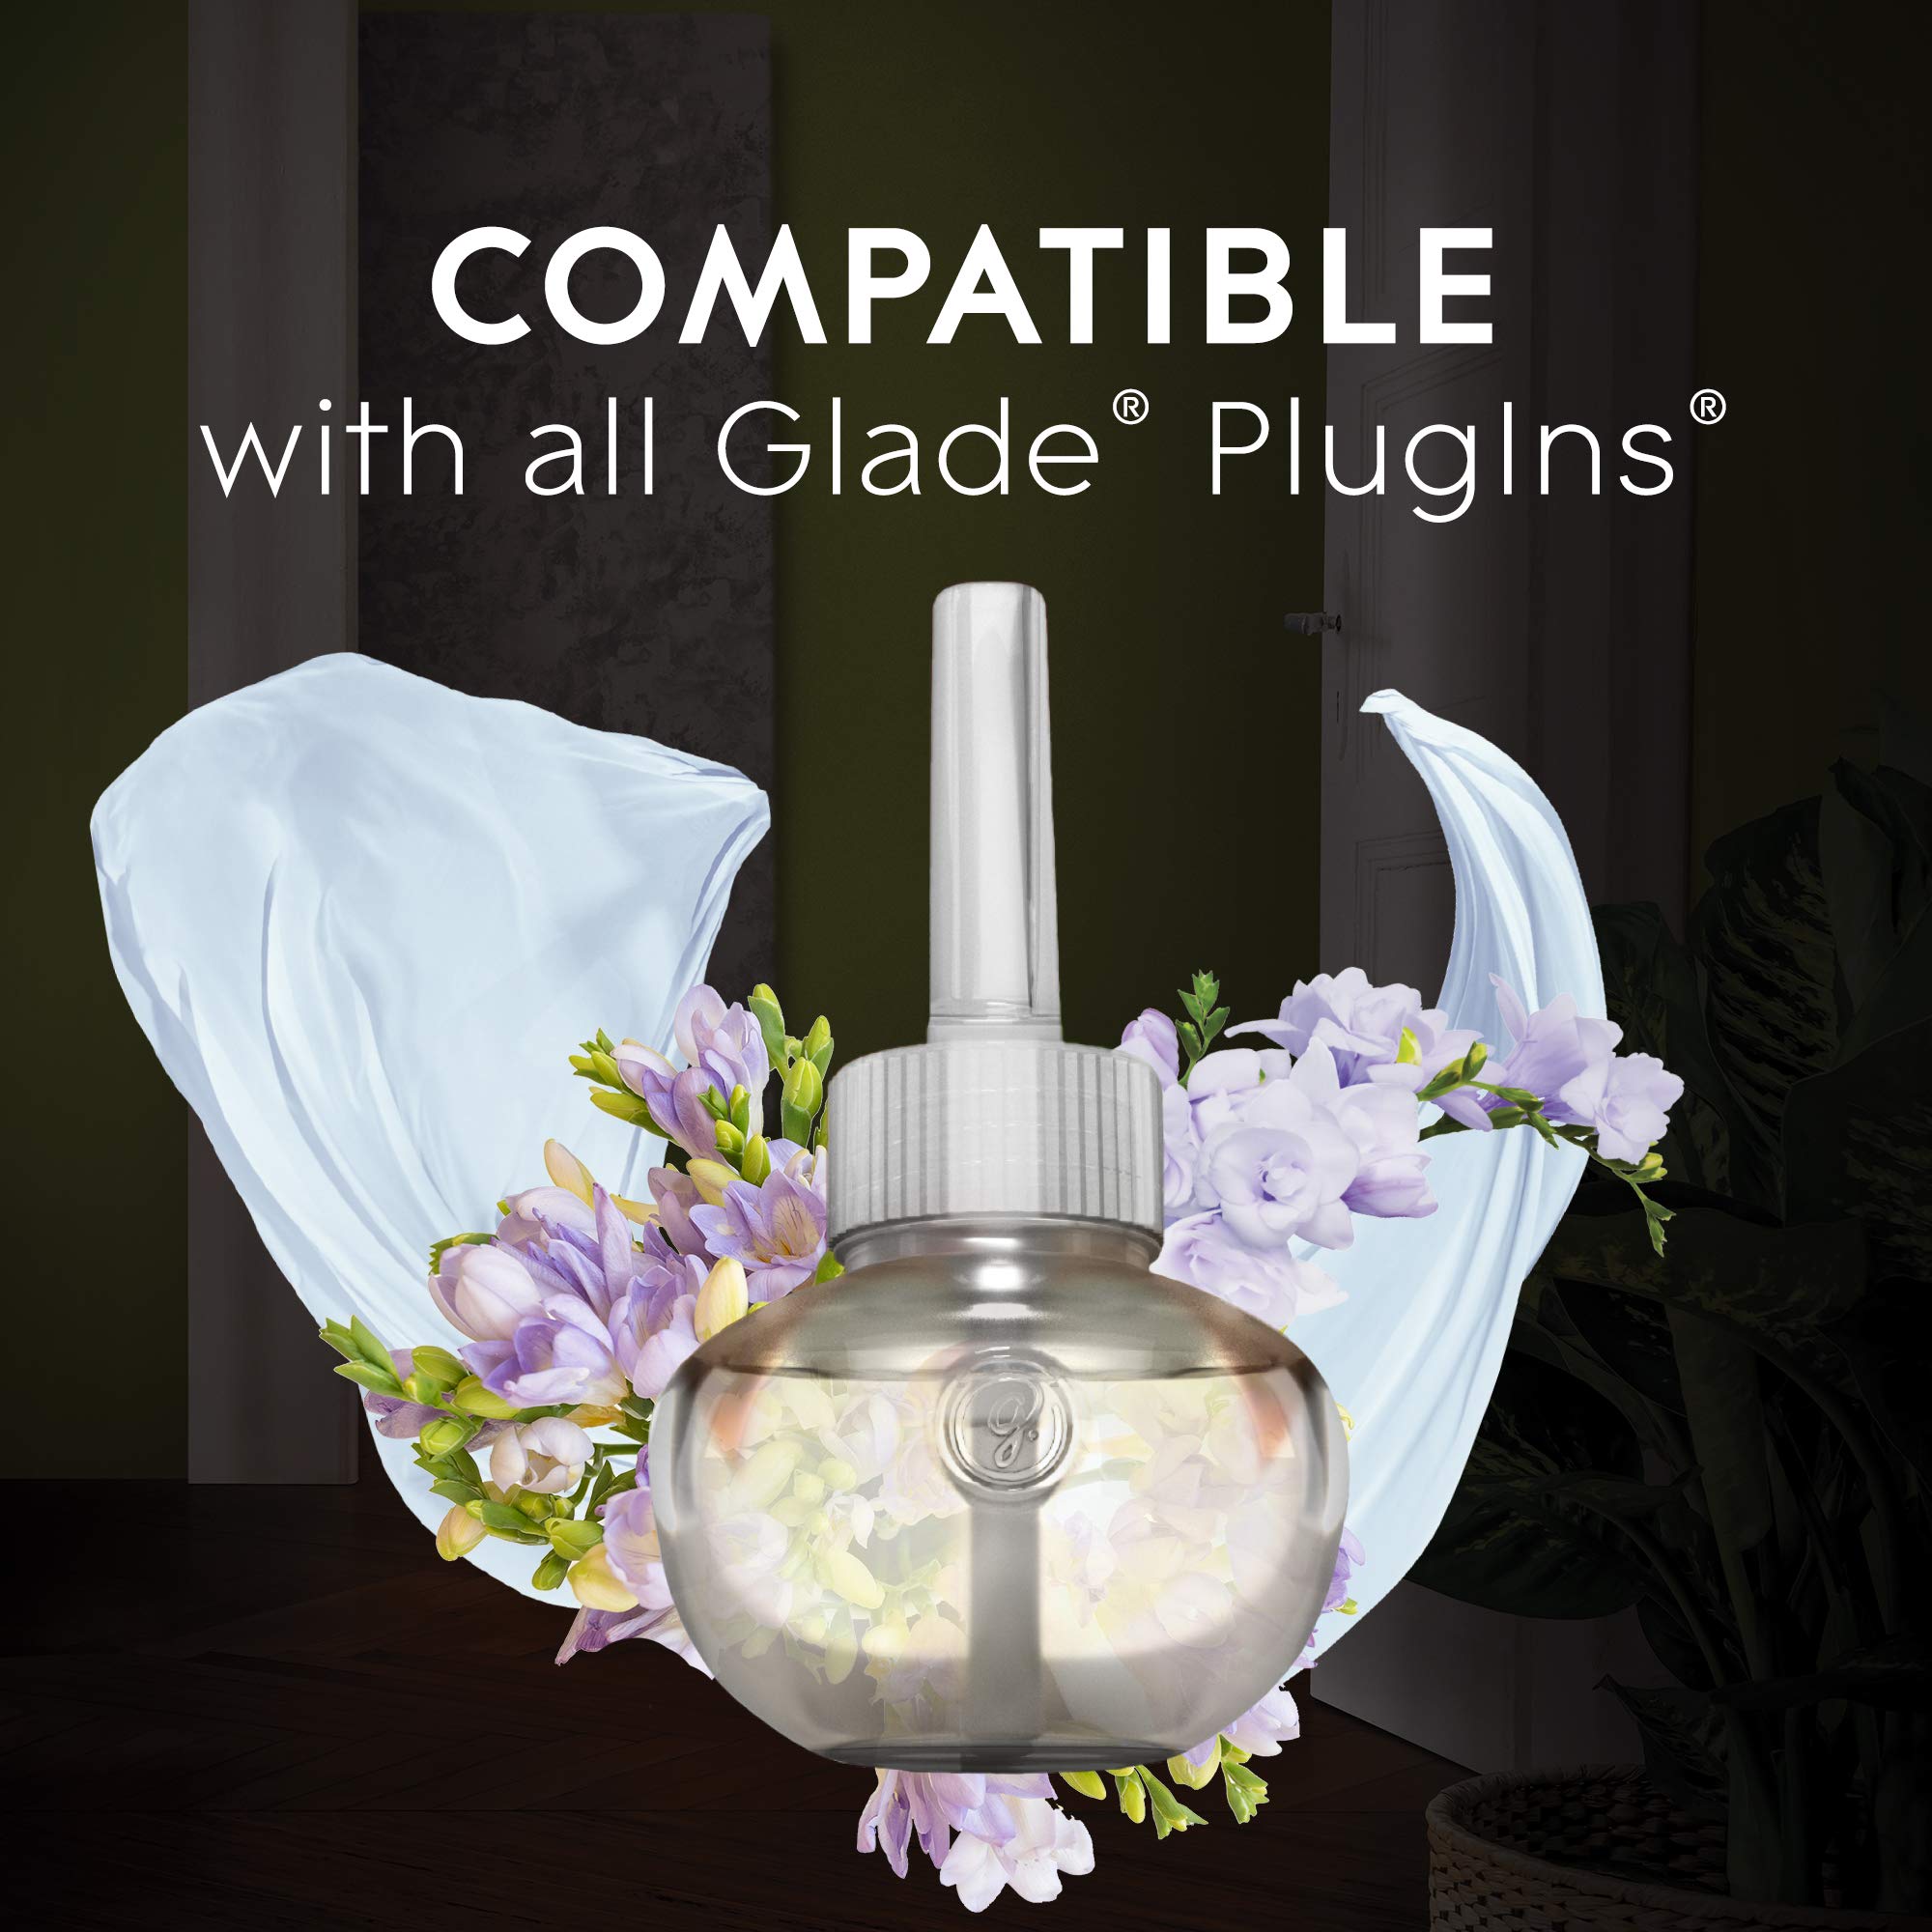 Glade PlugIn Plus Air Freshener Starter Kit, Scented Oil for Home and Bathroom, Clean Linen, 2.01 Fl Oz, 1 Warmer + 3 Refills